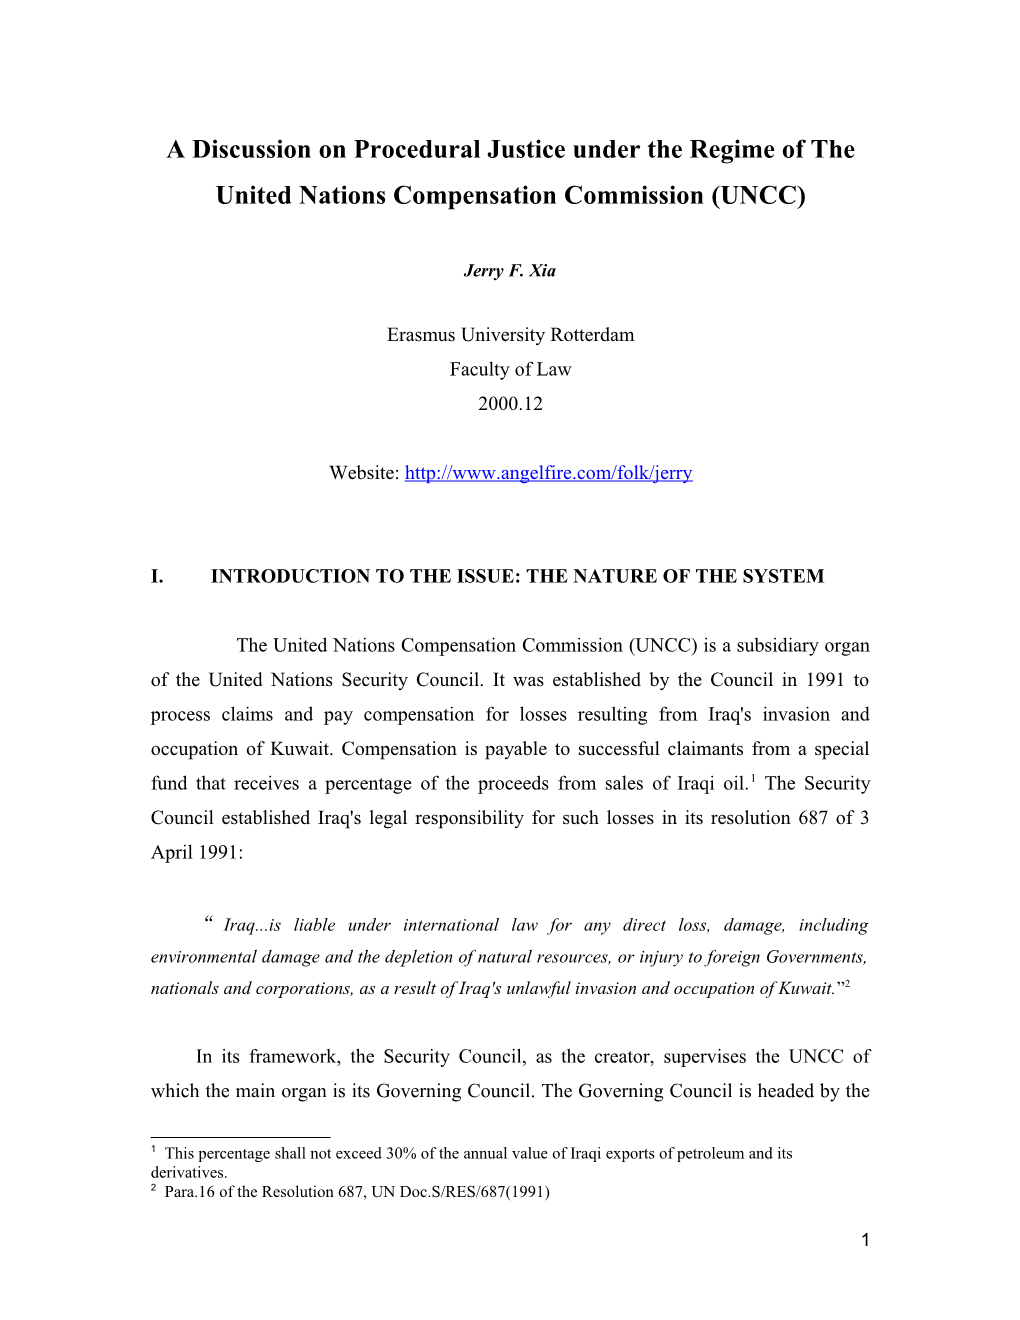 The United Nations Compensation Commission (UNCC)